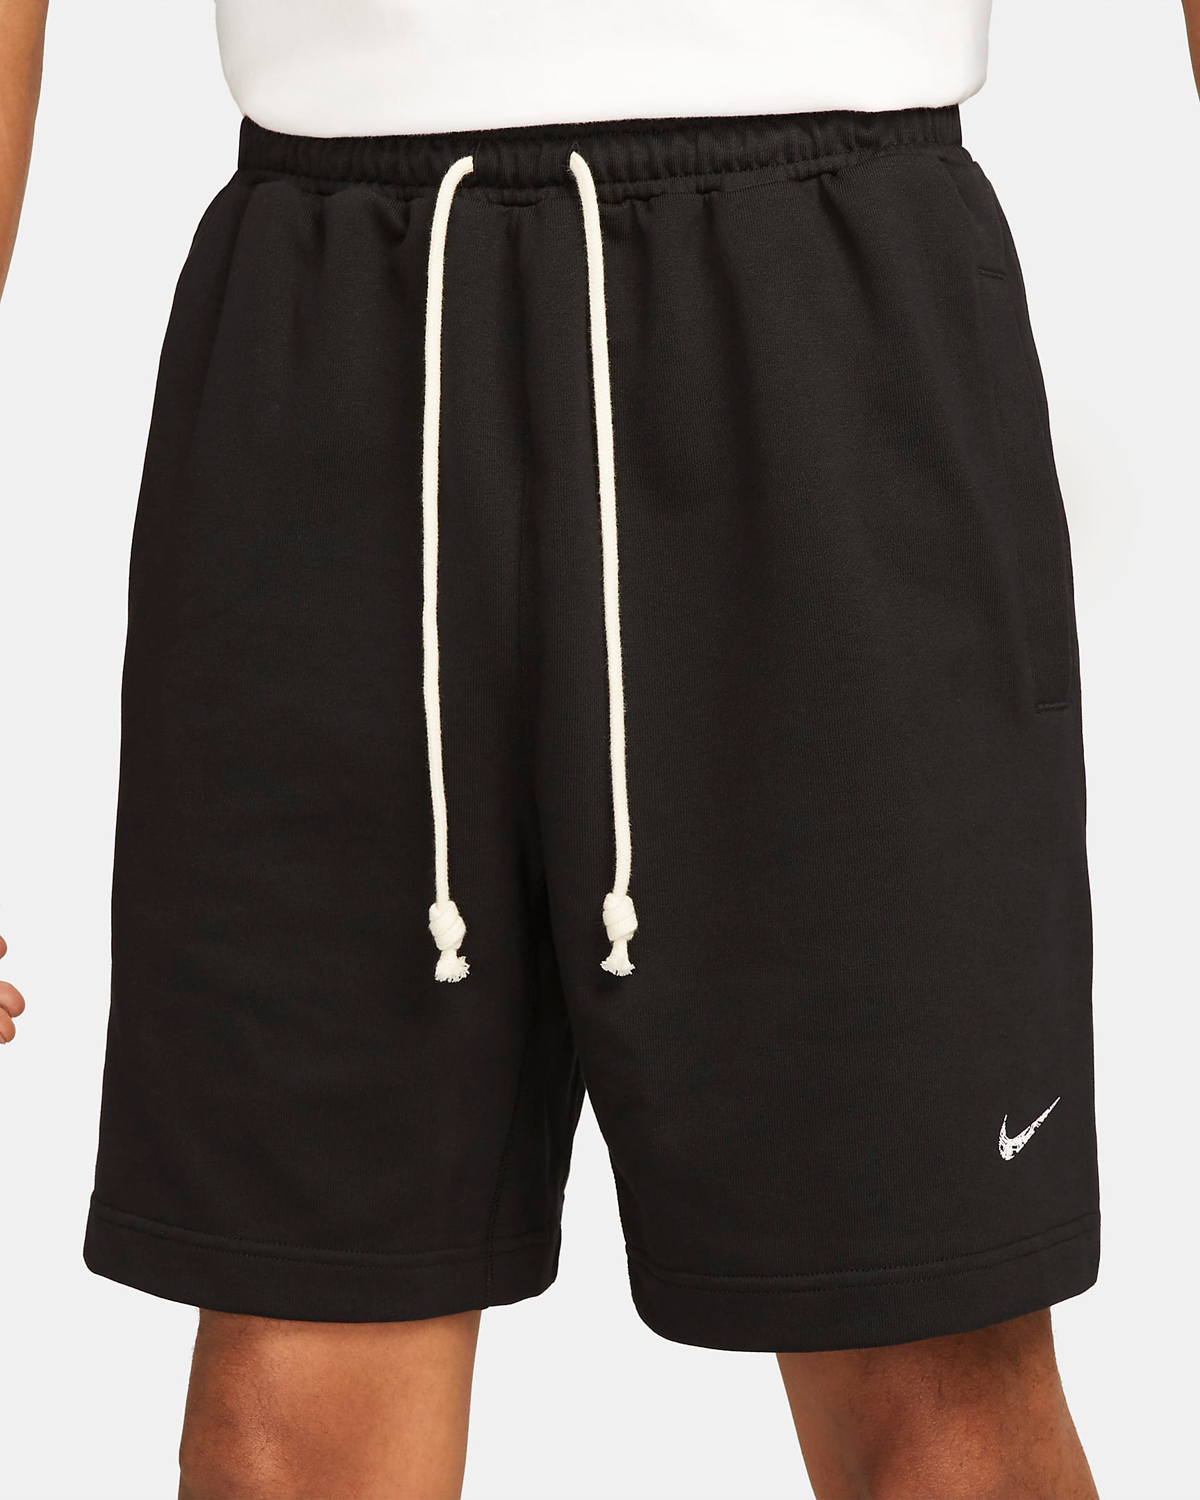 Nike-Standard-Issue-Shorts-Black-White-2